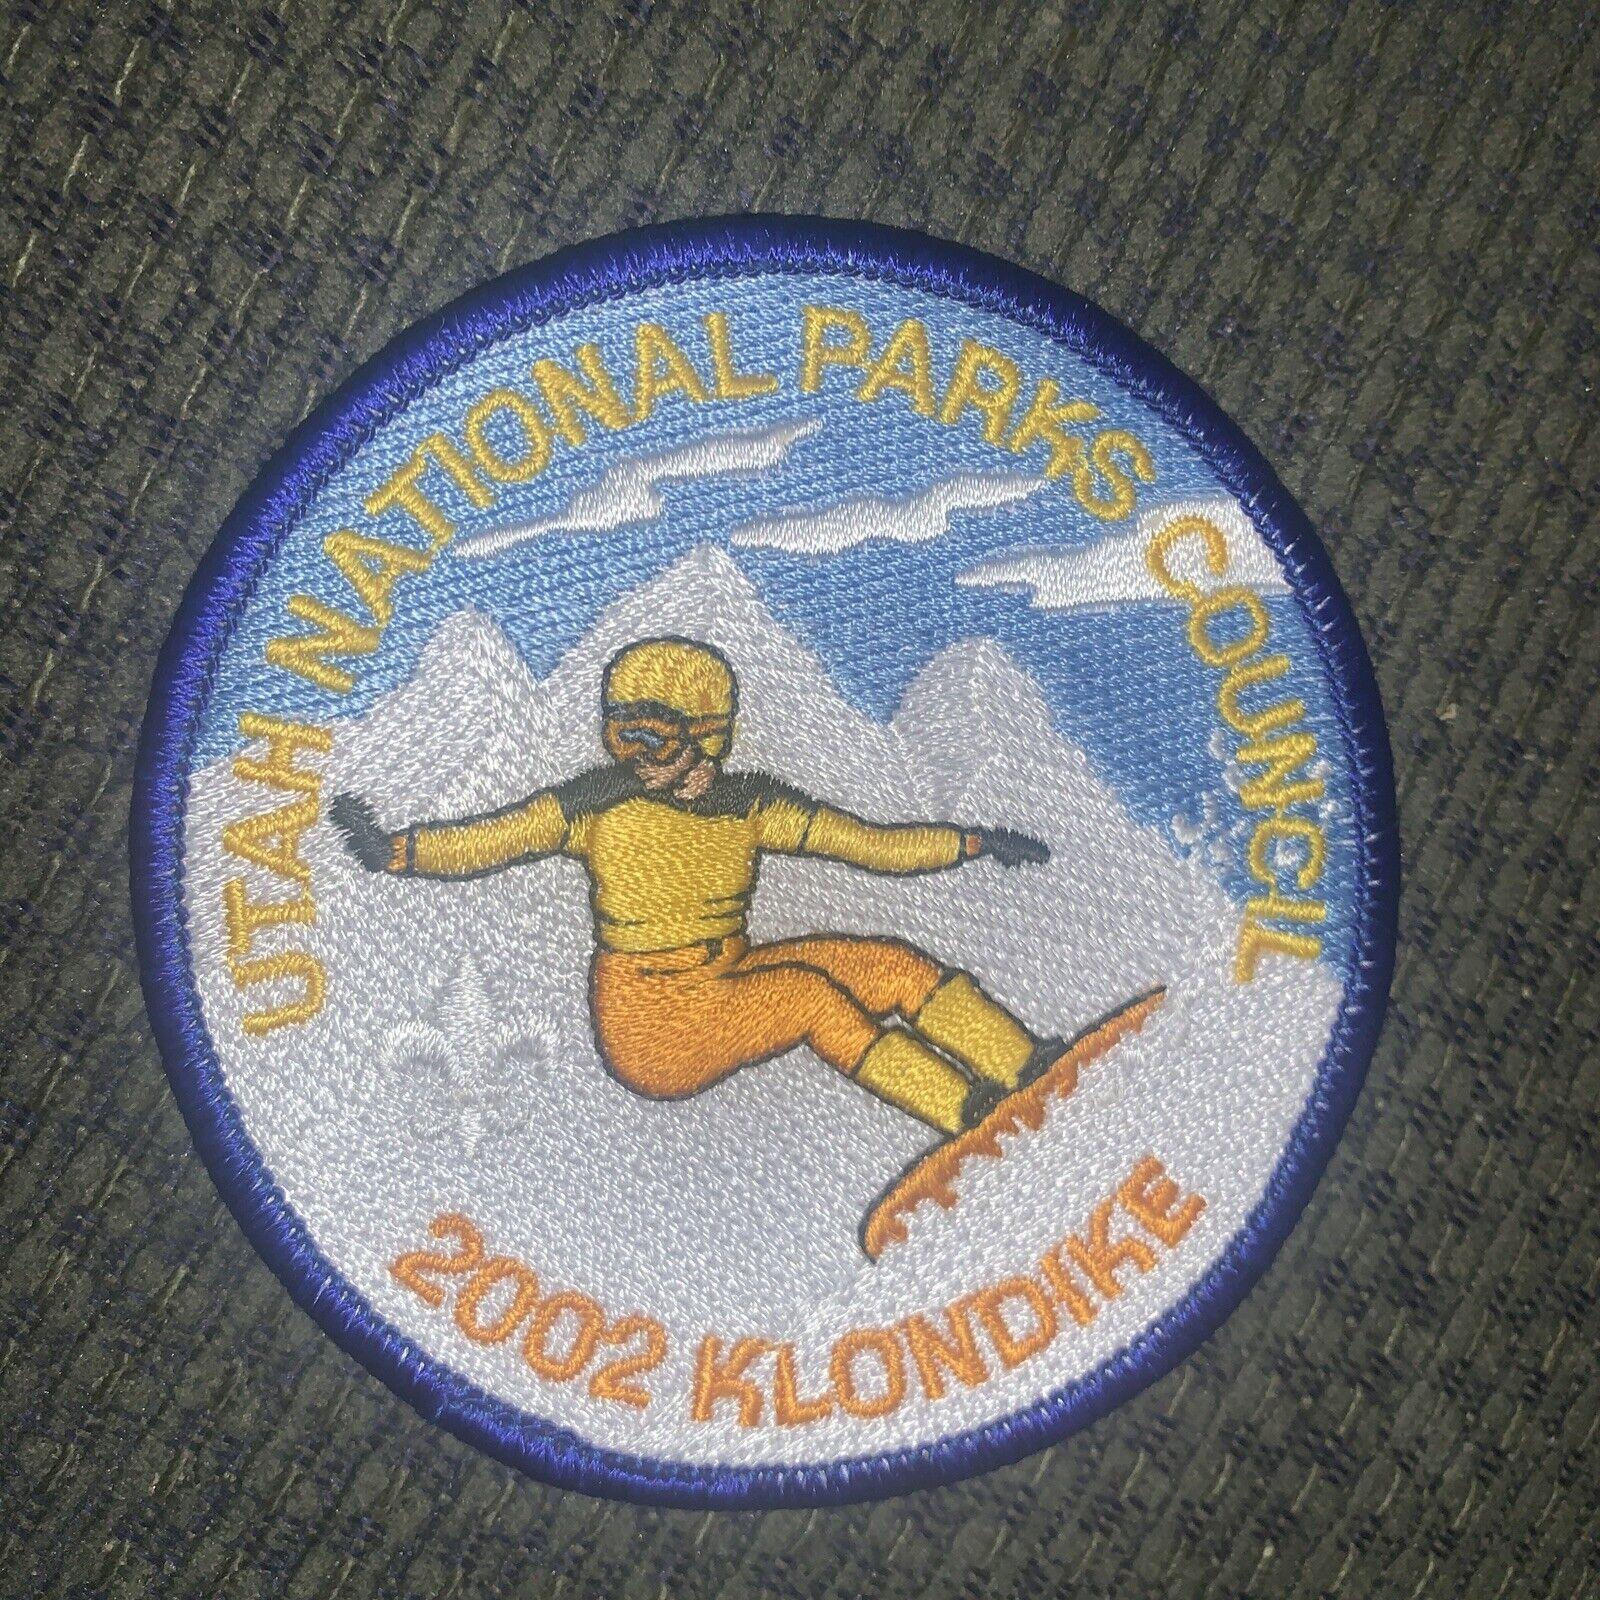 2002 Utah National Parks Council Klondike Derby Boy Scout Patch Snowboarder